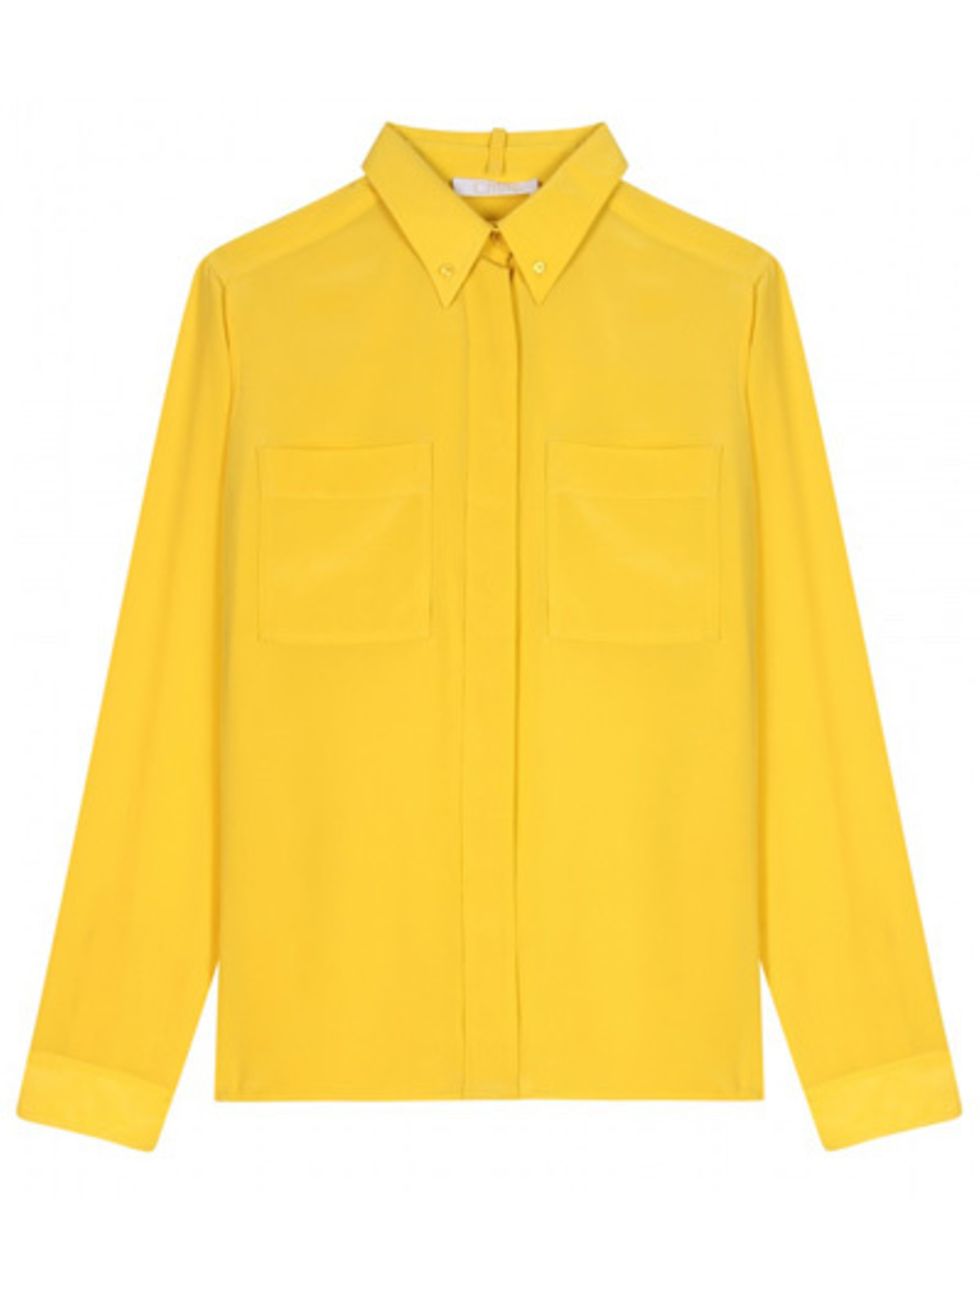 Yellow, Product, Collar, Sleeve, Textile, Outerwear, Orange, Fashion, Electric blue, Jacket, 